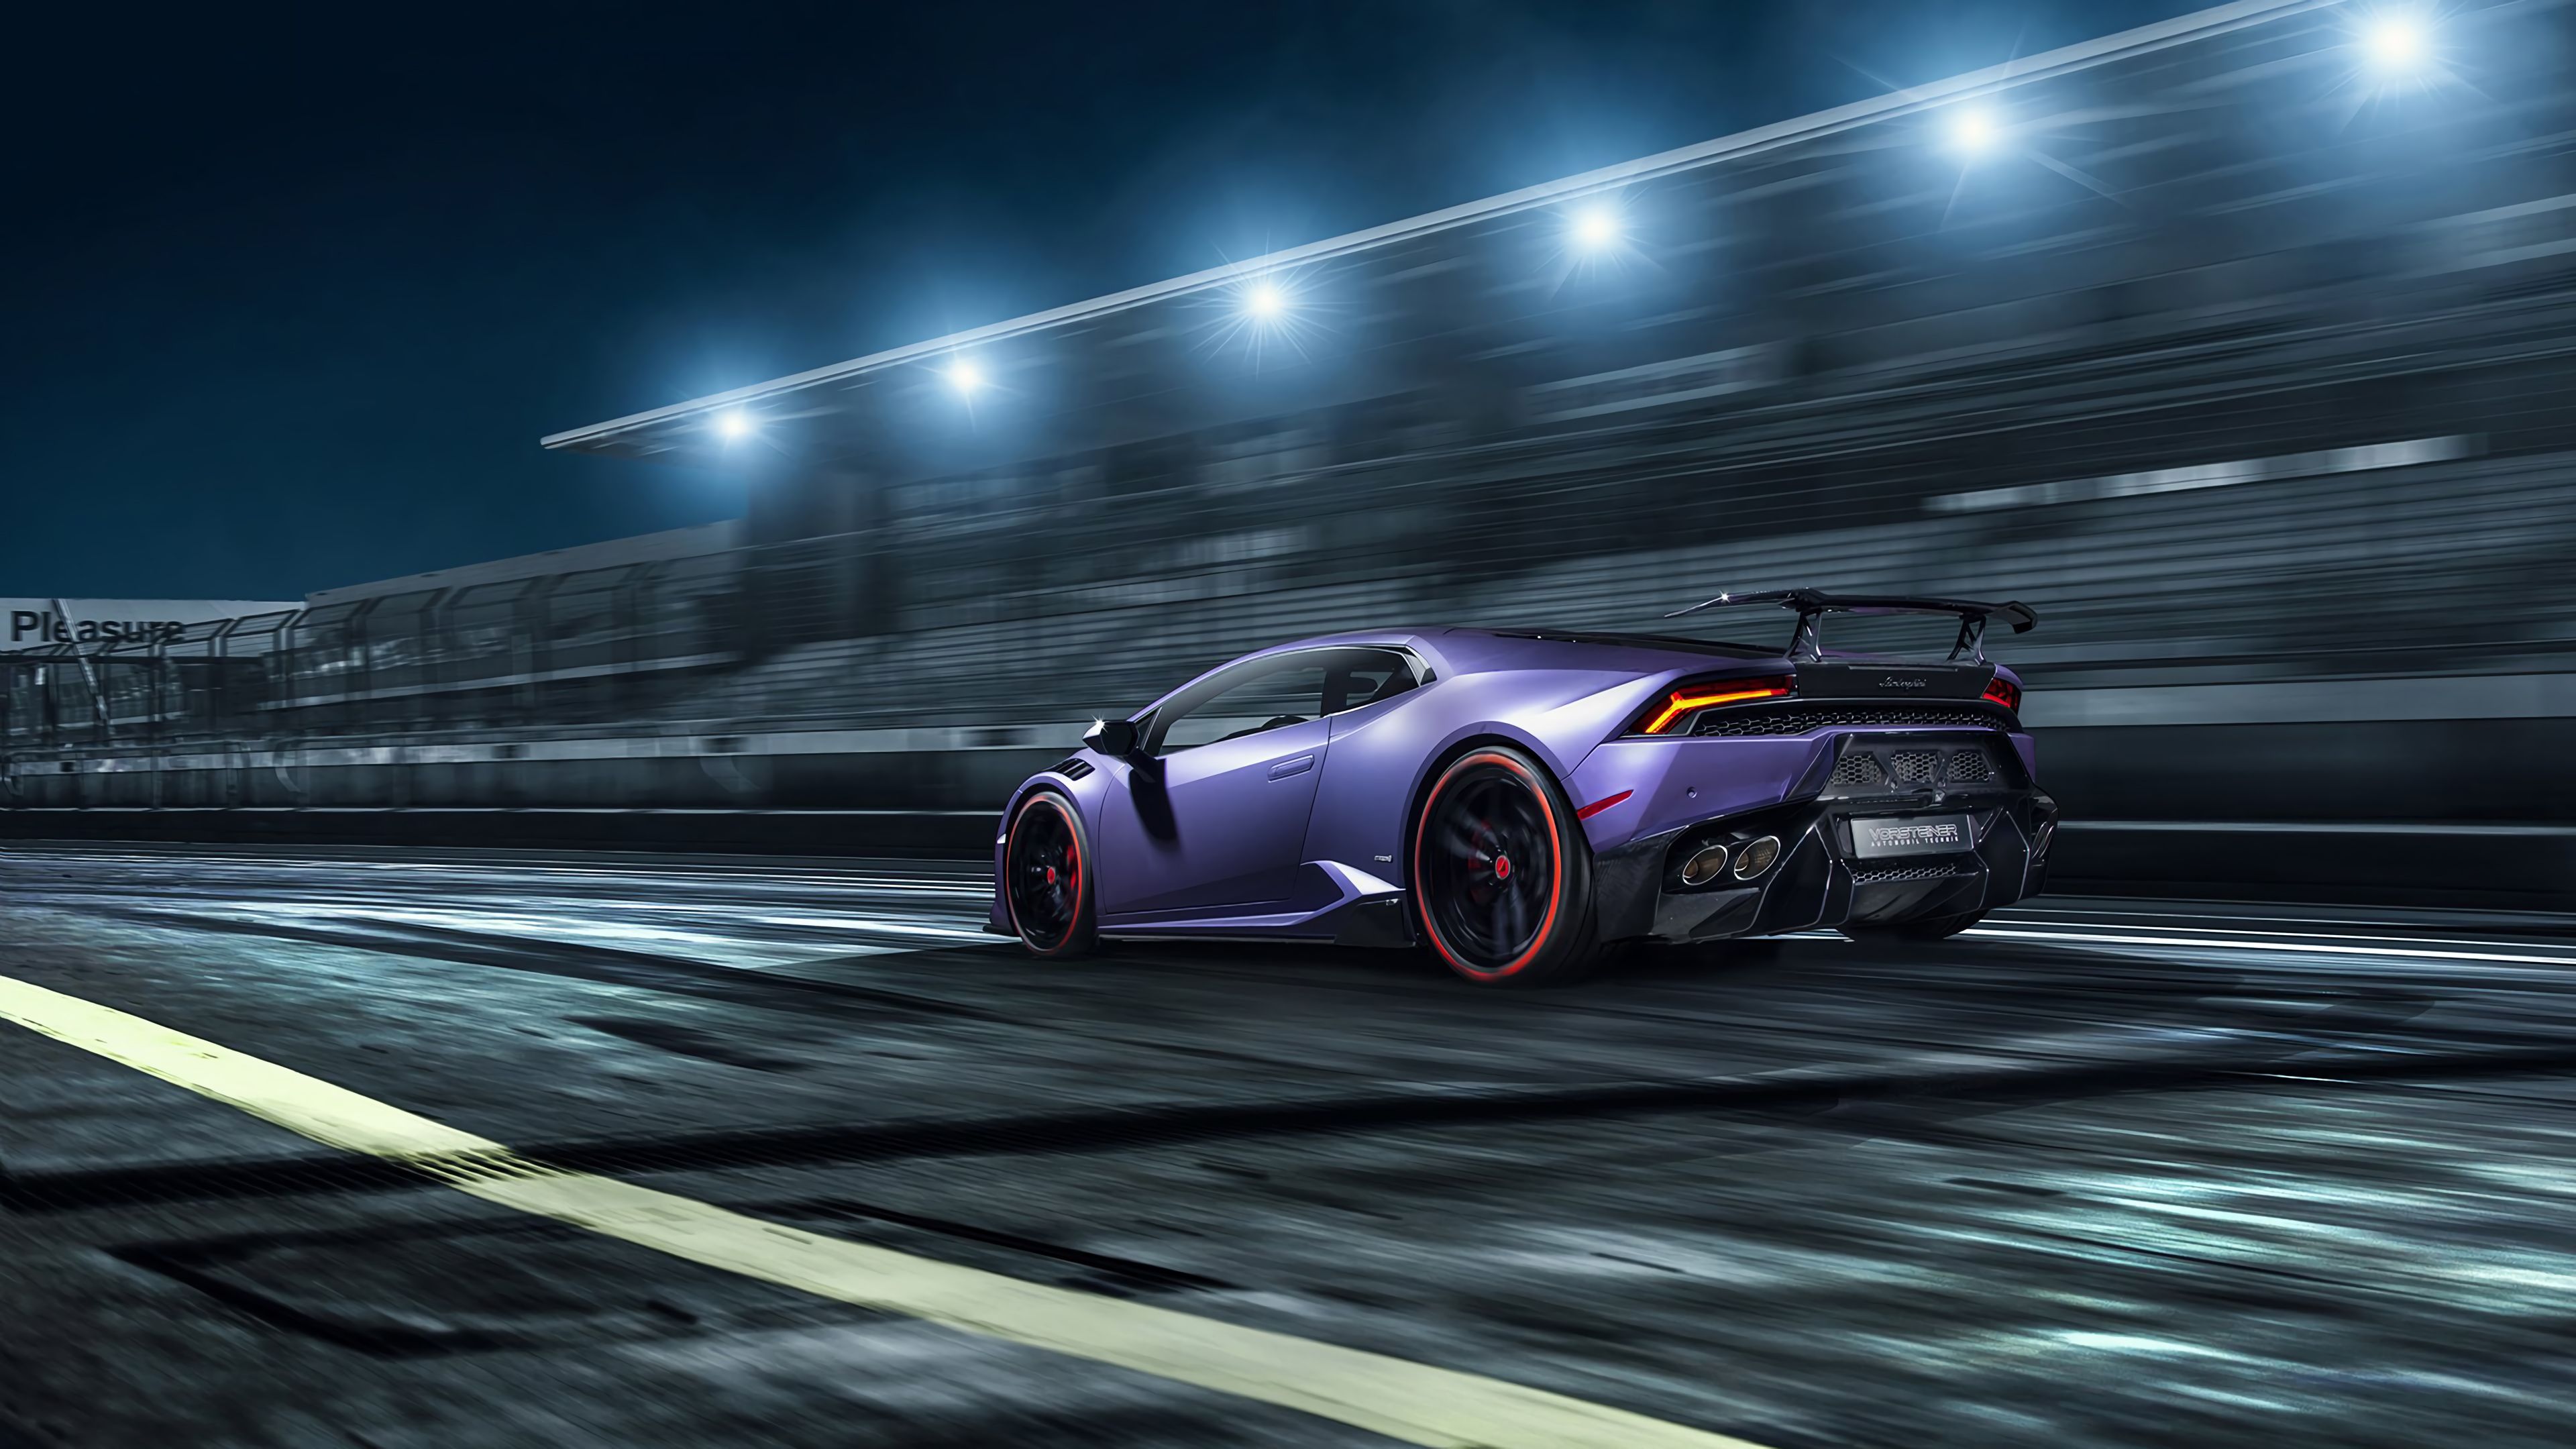 Purple Lamborghini 4k 2019 New, HD Cars, 4k Wallpaper, Image, Background, Photo and Picture